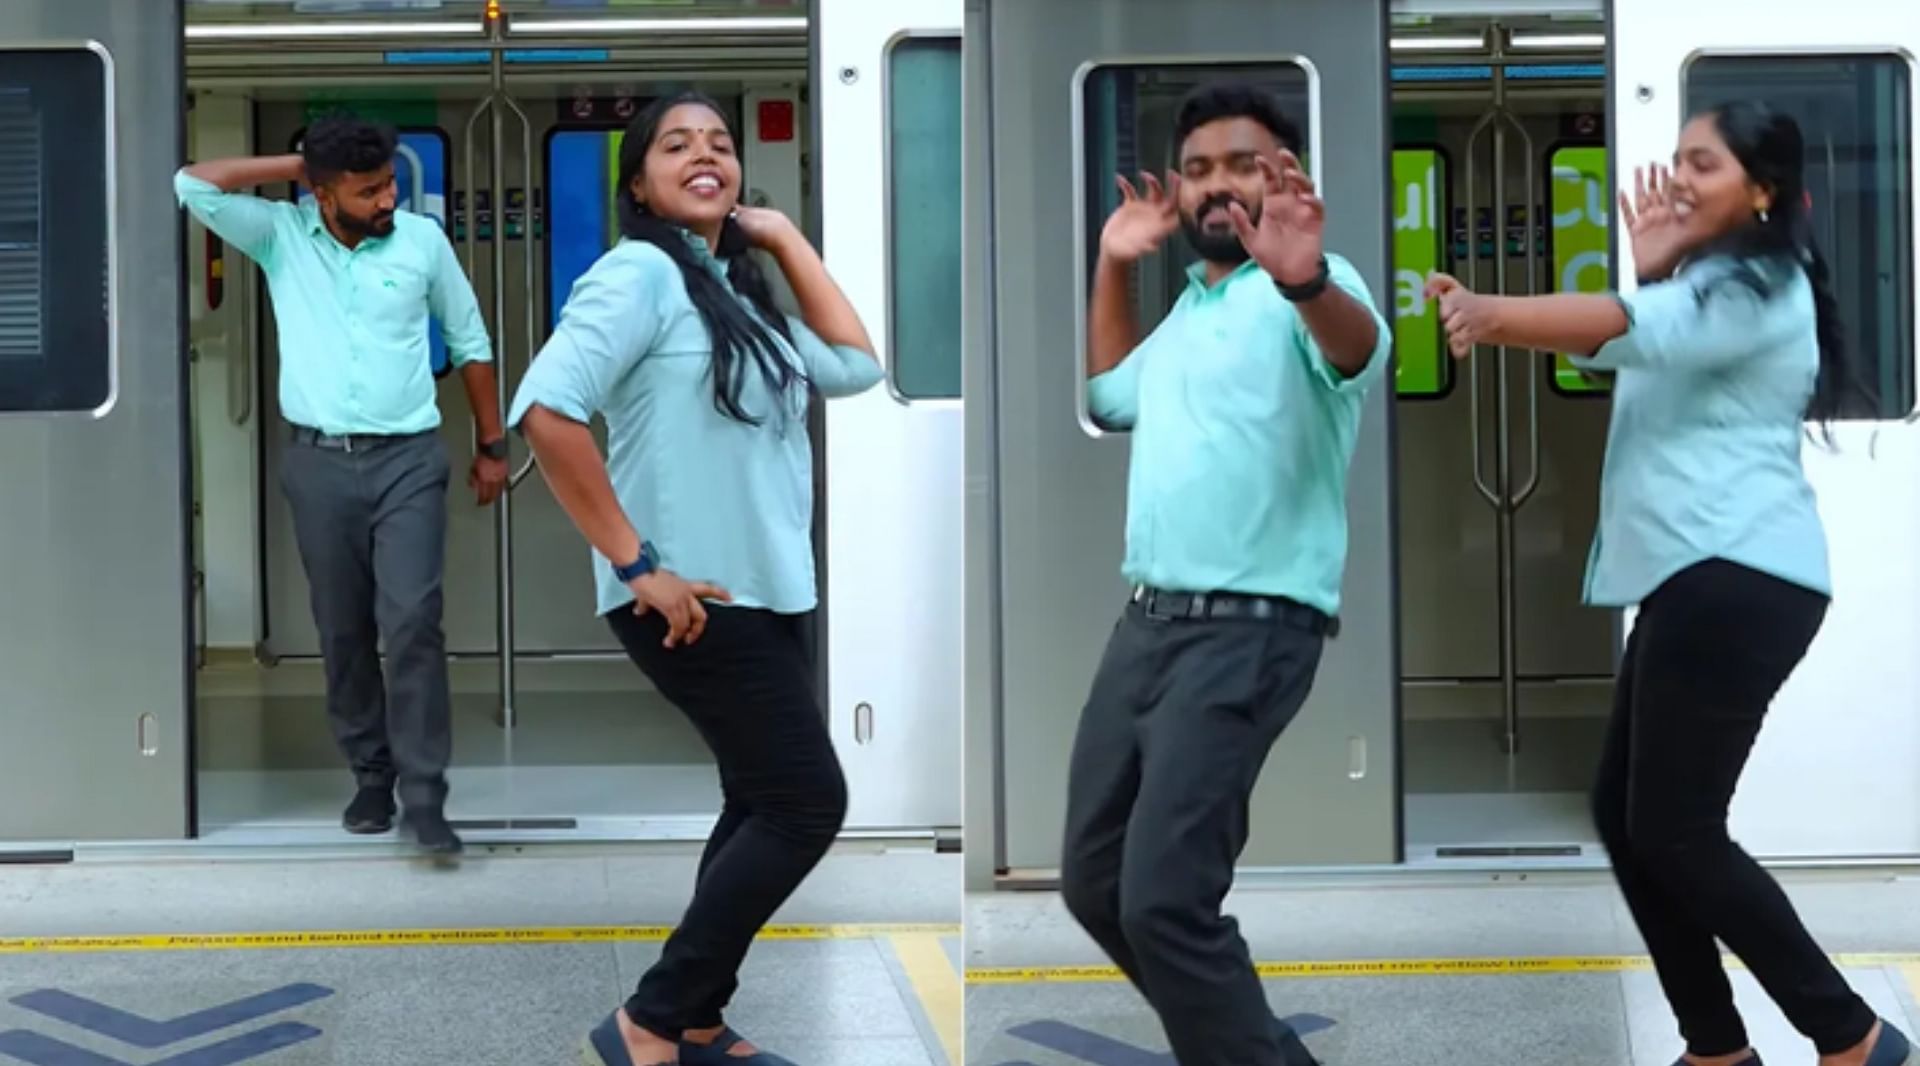 Metro staff dancing in the metro video went viral oN social media